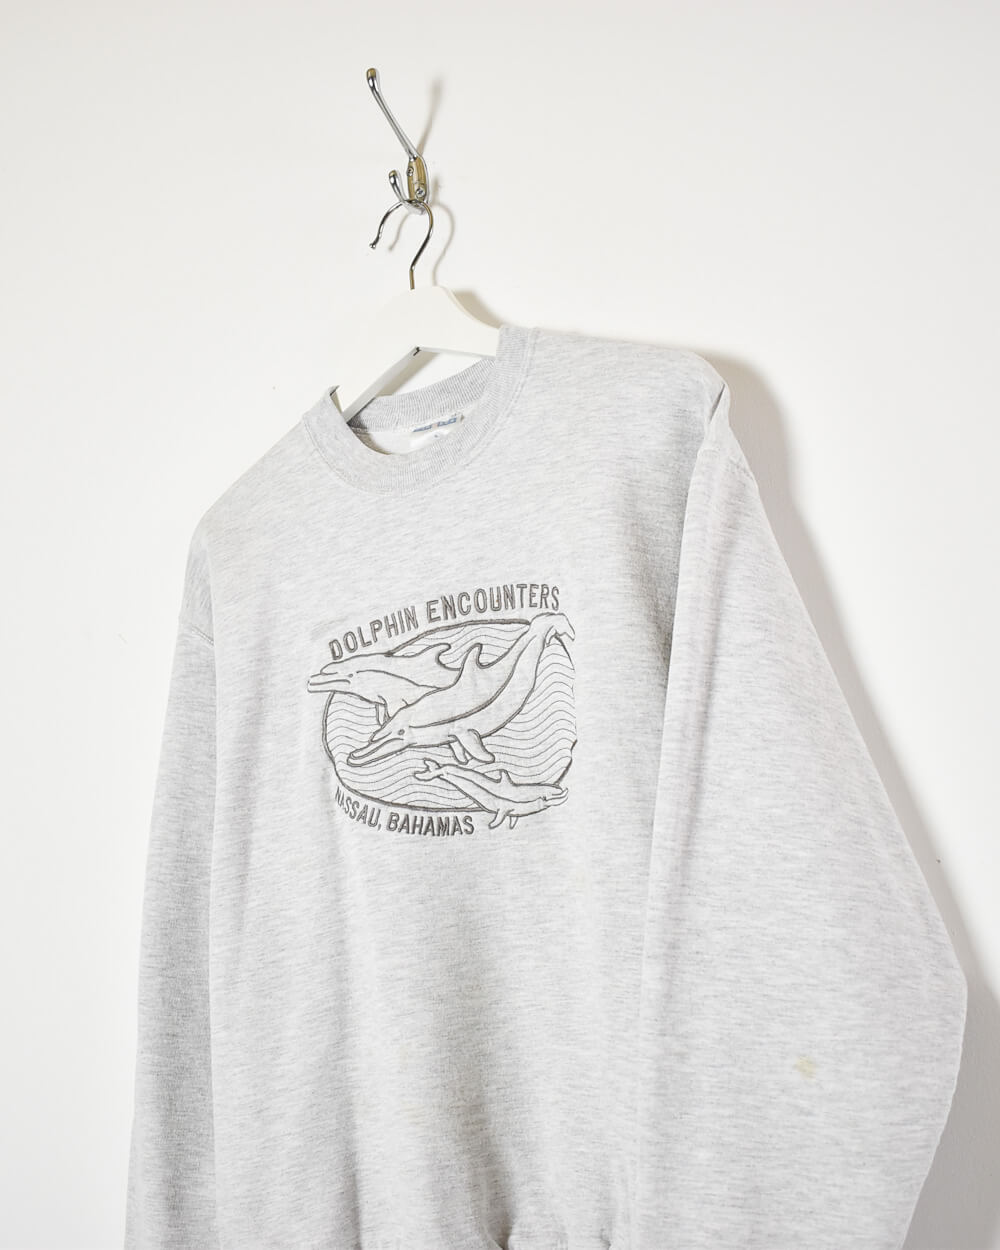 Stone Jerzees Dolphin Encounters Sweatshirt - Small